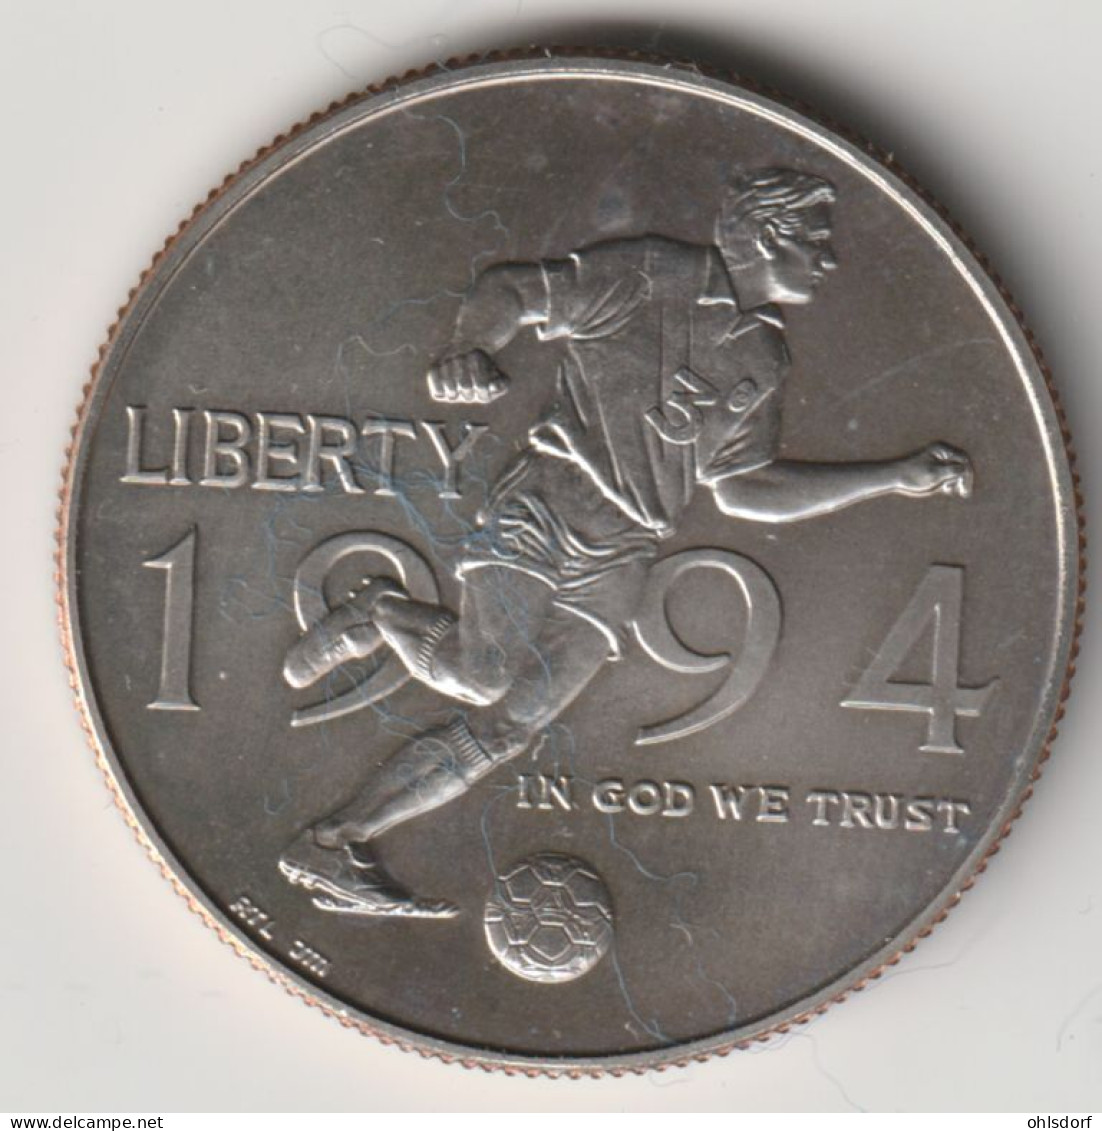 U.S.A. 1994: 1/2 Dollar, World Cup, KM 246 - Commemorative